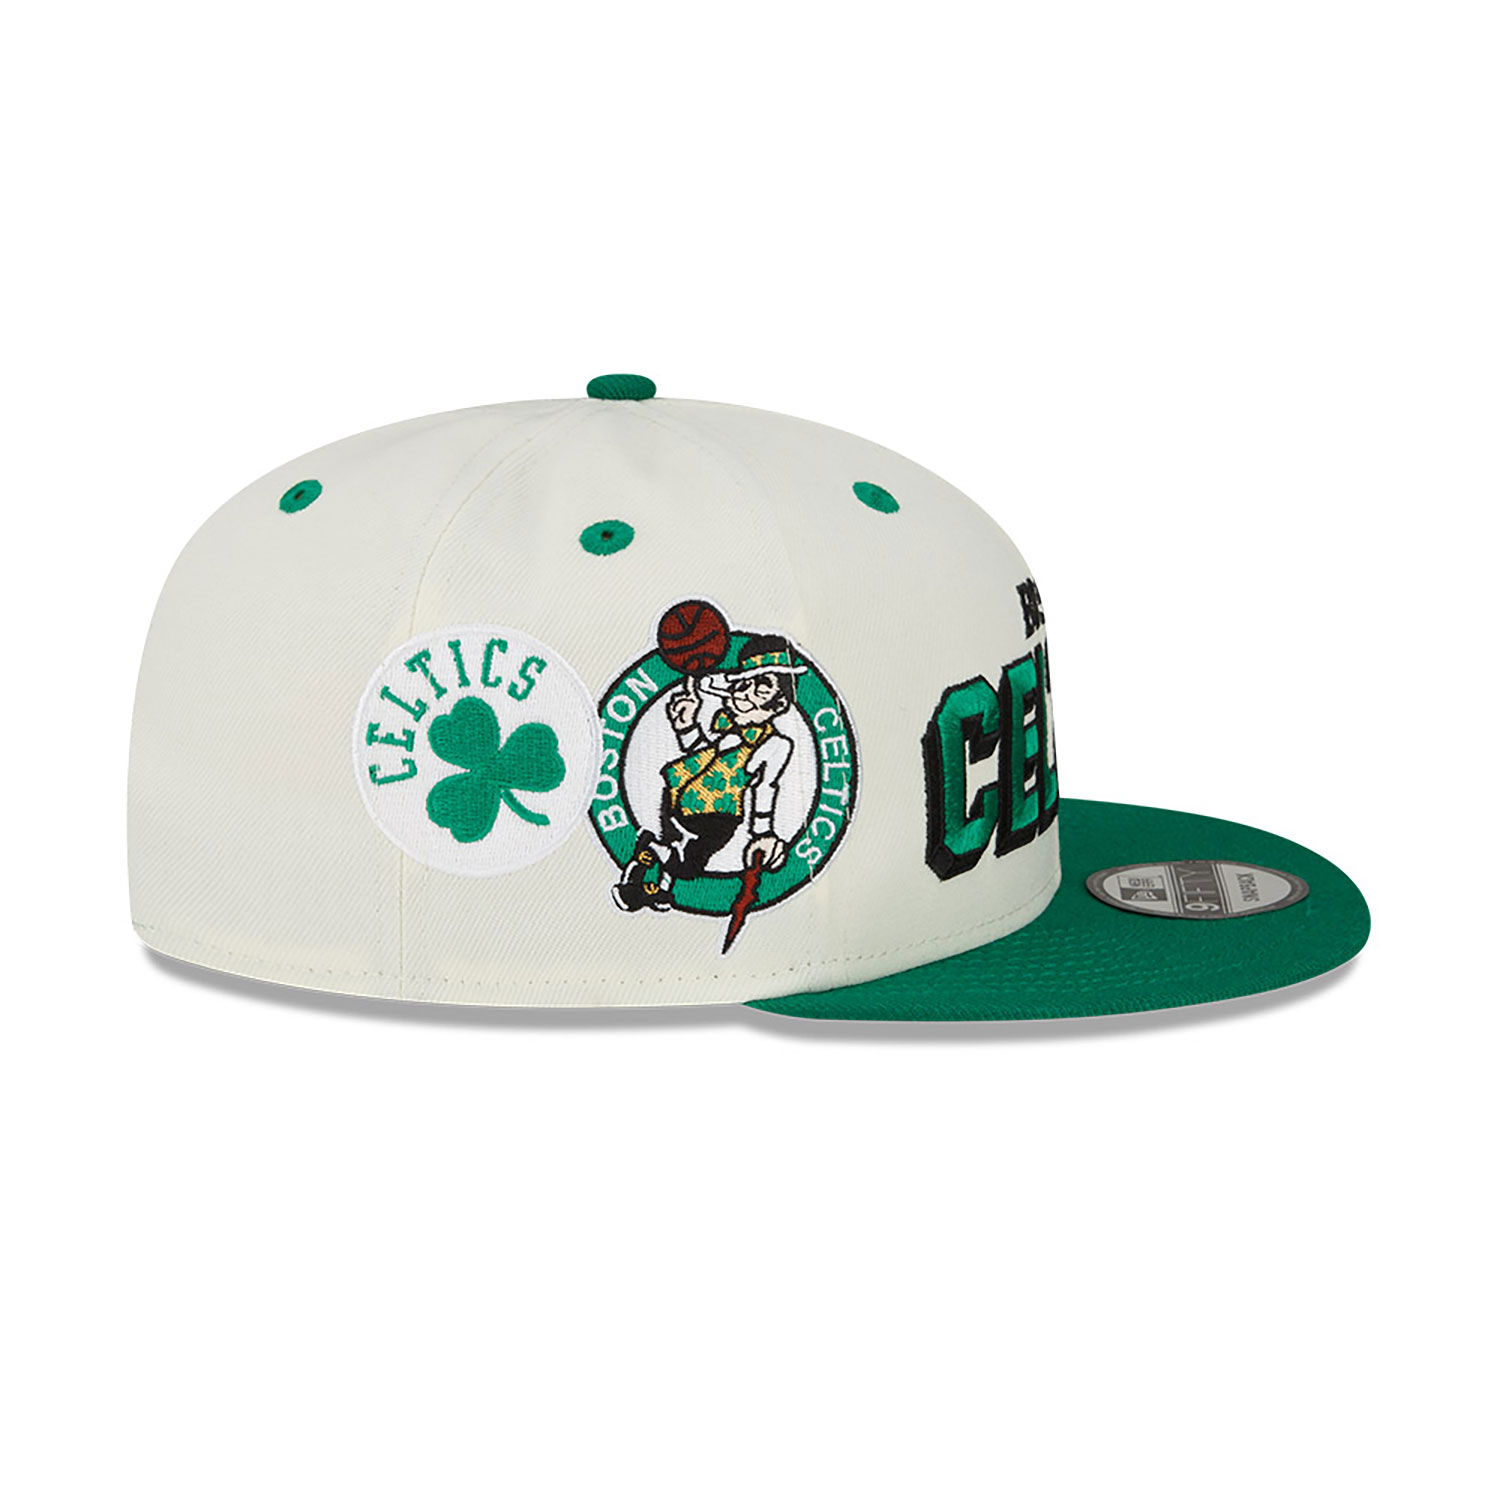 Boston Celtics Awake White 9FIFTY Snapback Cap